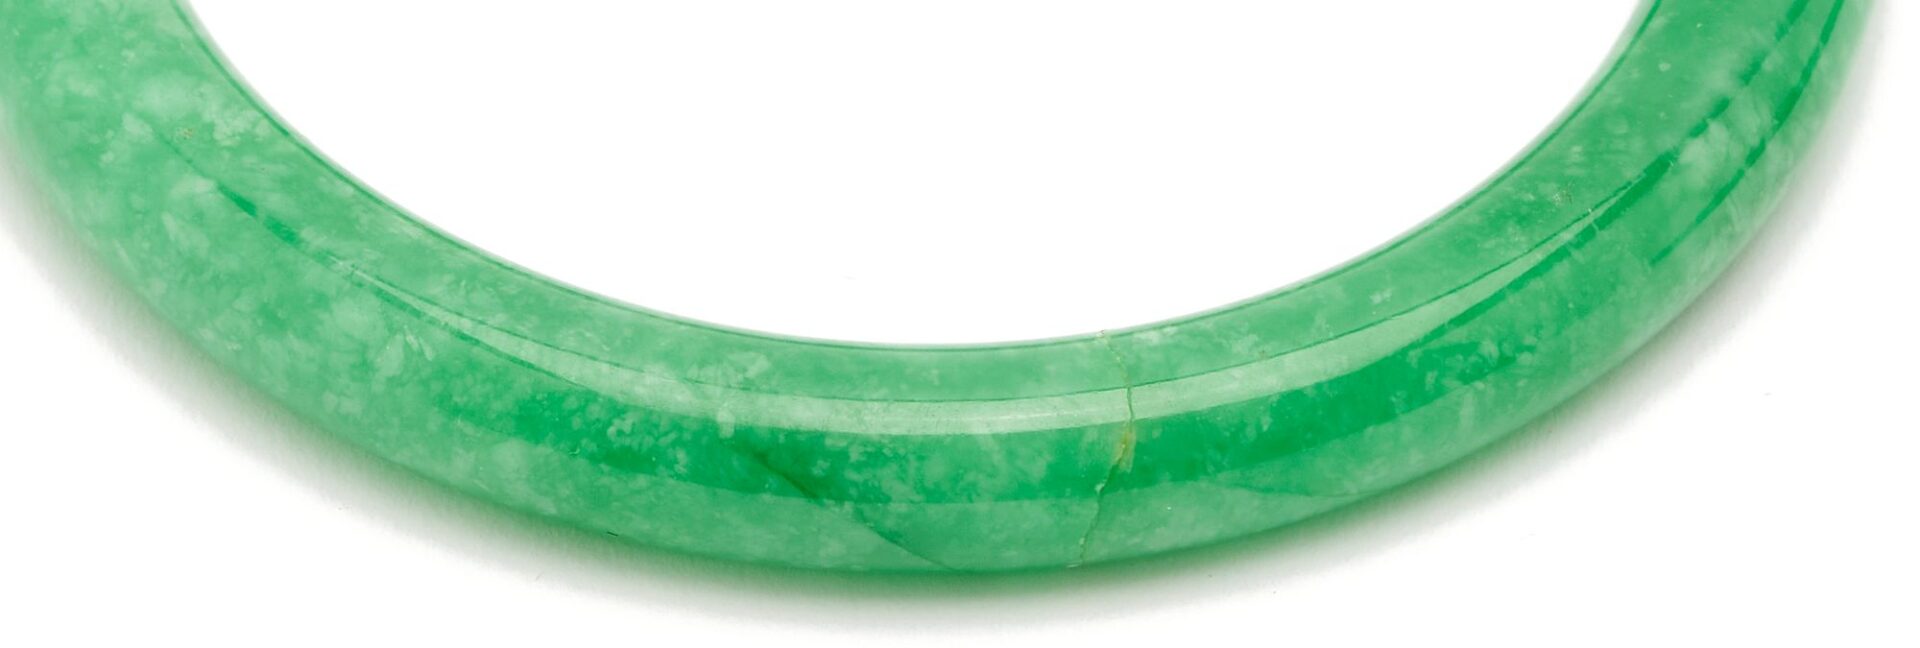 Lot 870: 2 Apple Green Jade Bangle Bracelets plus Beads